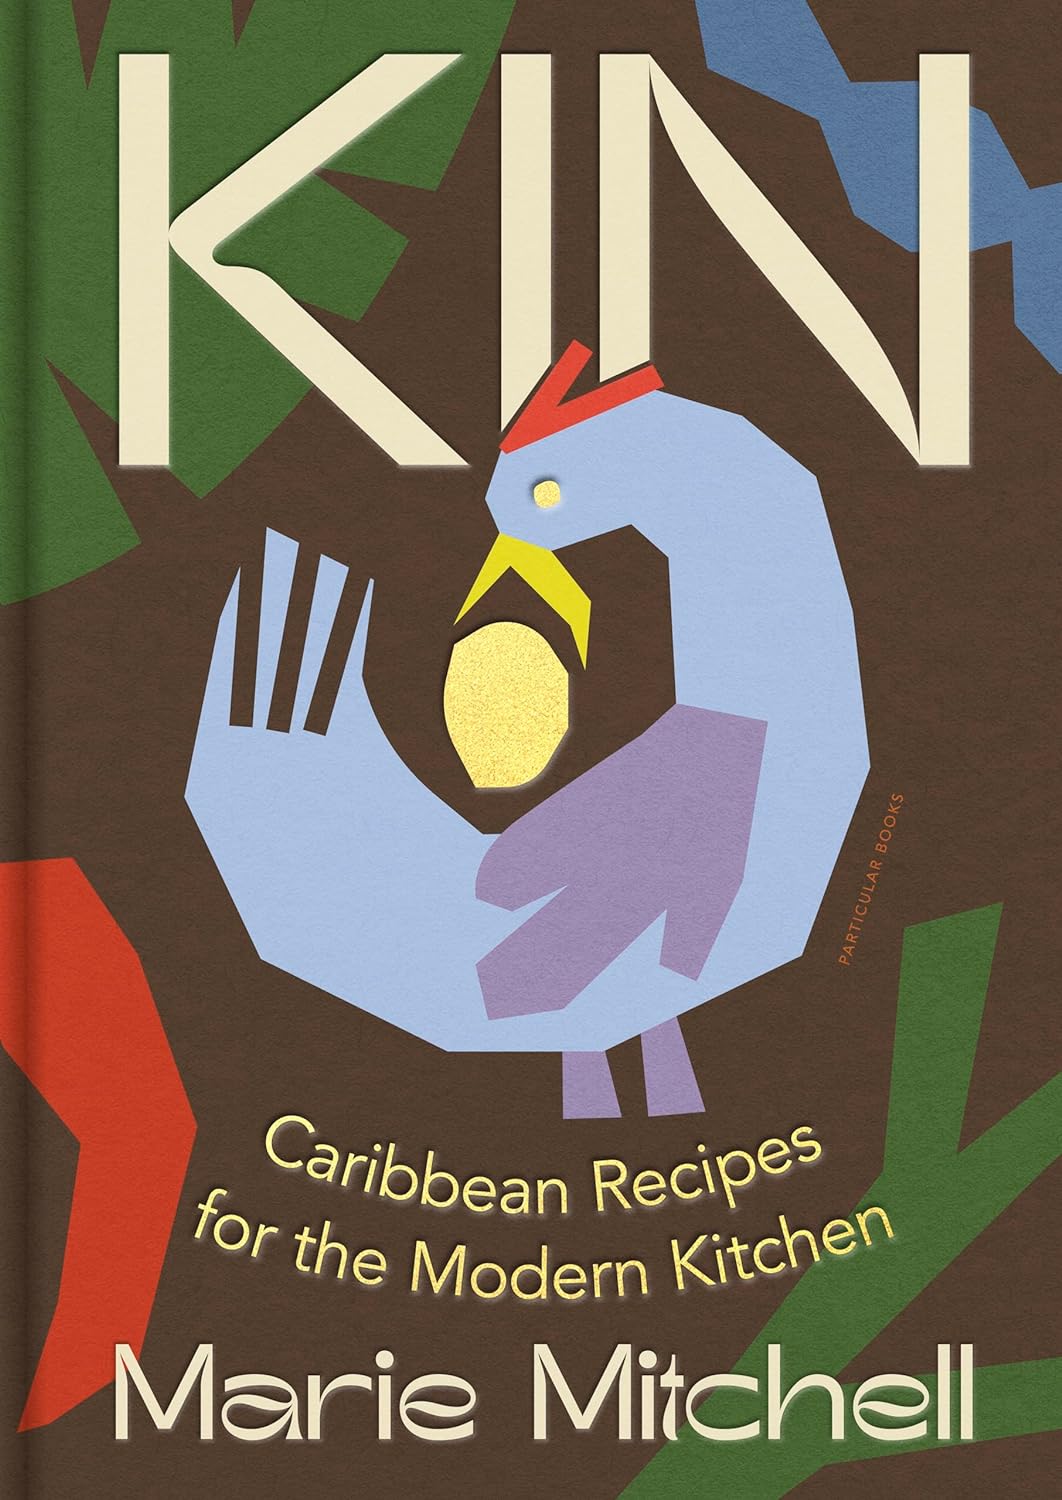 Kin - Caribbean Recipes for the Modern Kitchen